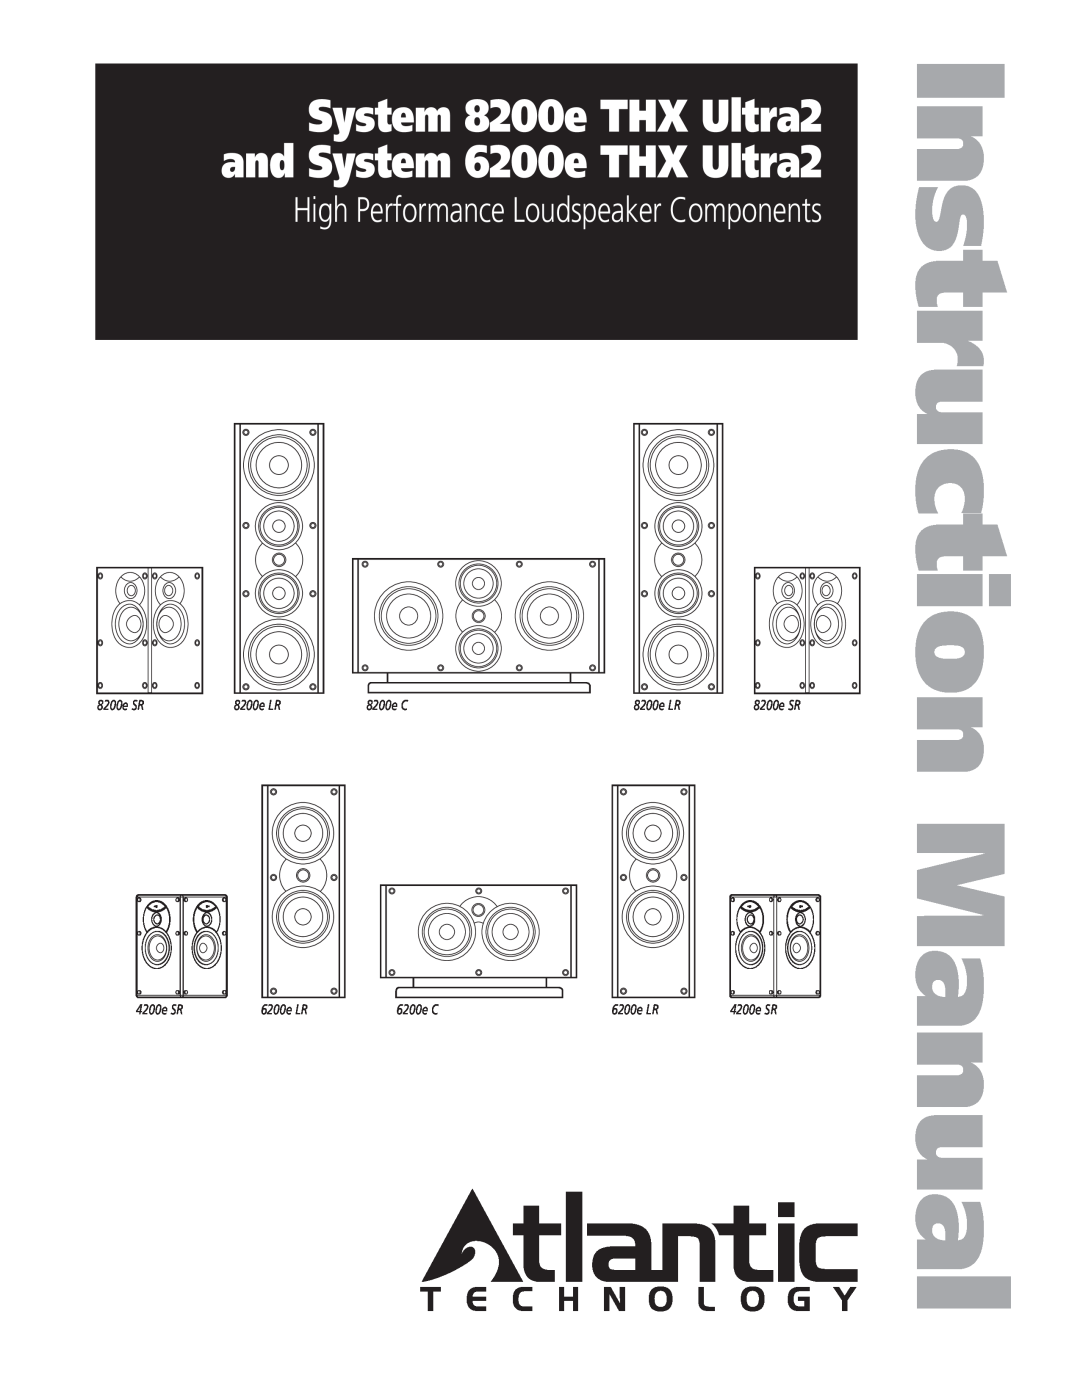 Atlantic Technology 8200E instruction manual High Performance Loudspeaker Components, 8200e SR, 8200e LR, 8200e C, 6200e C 